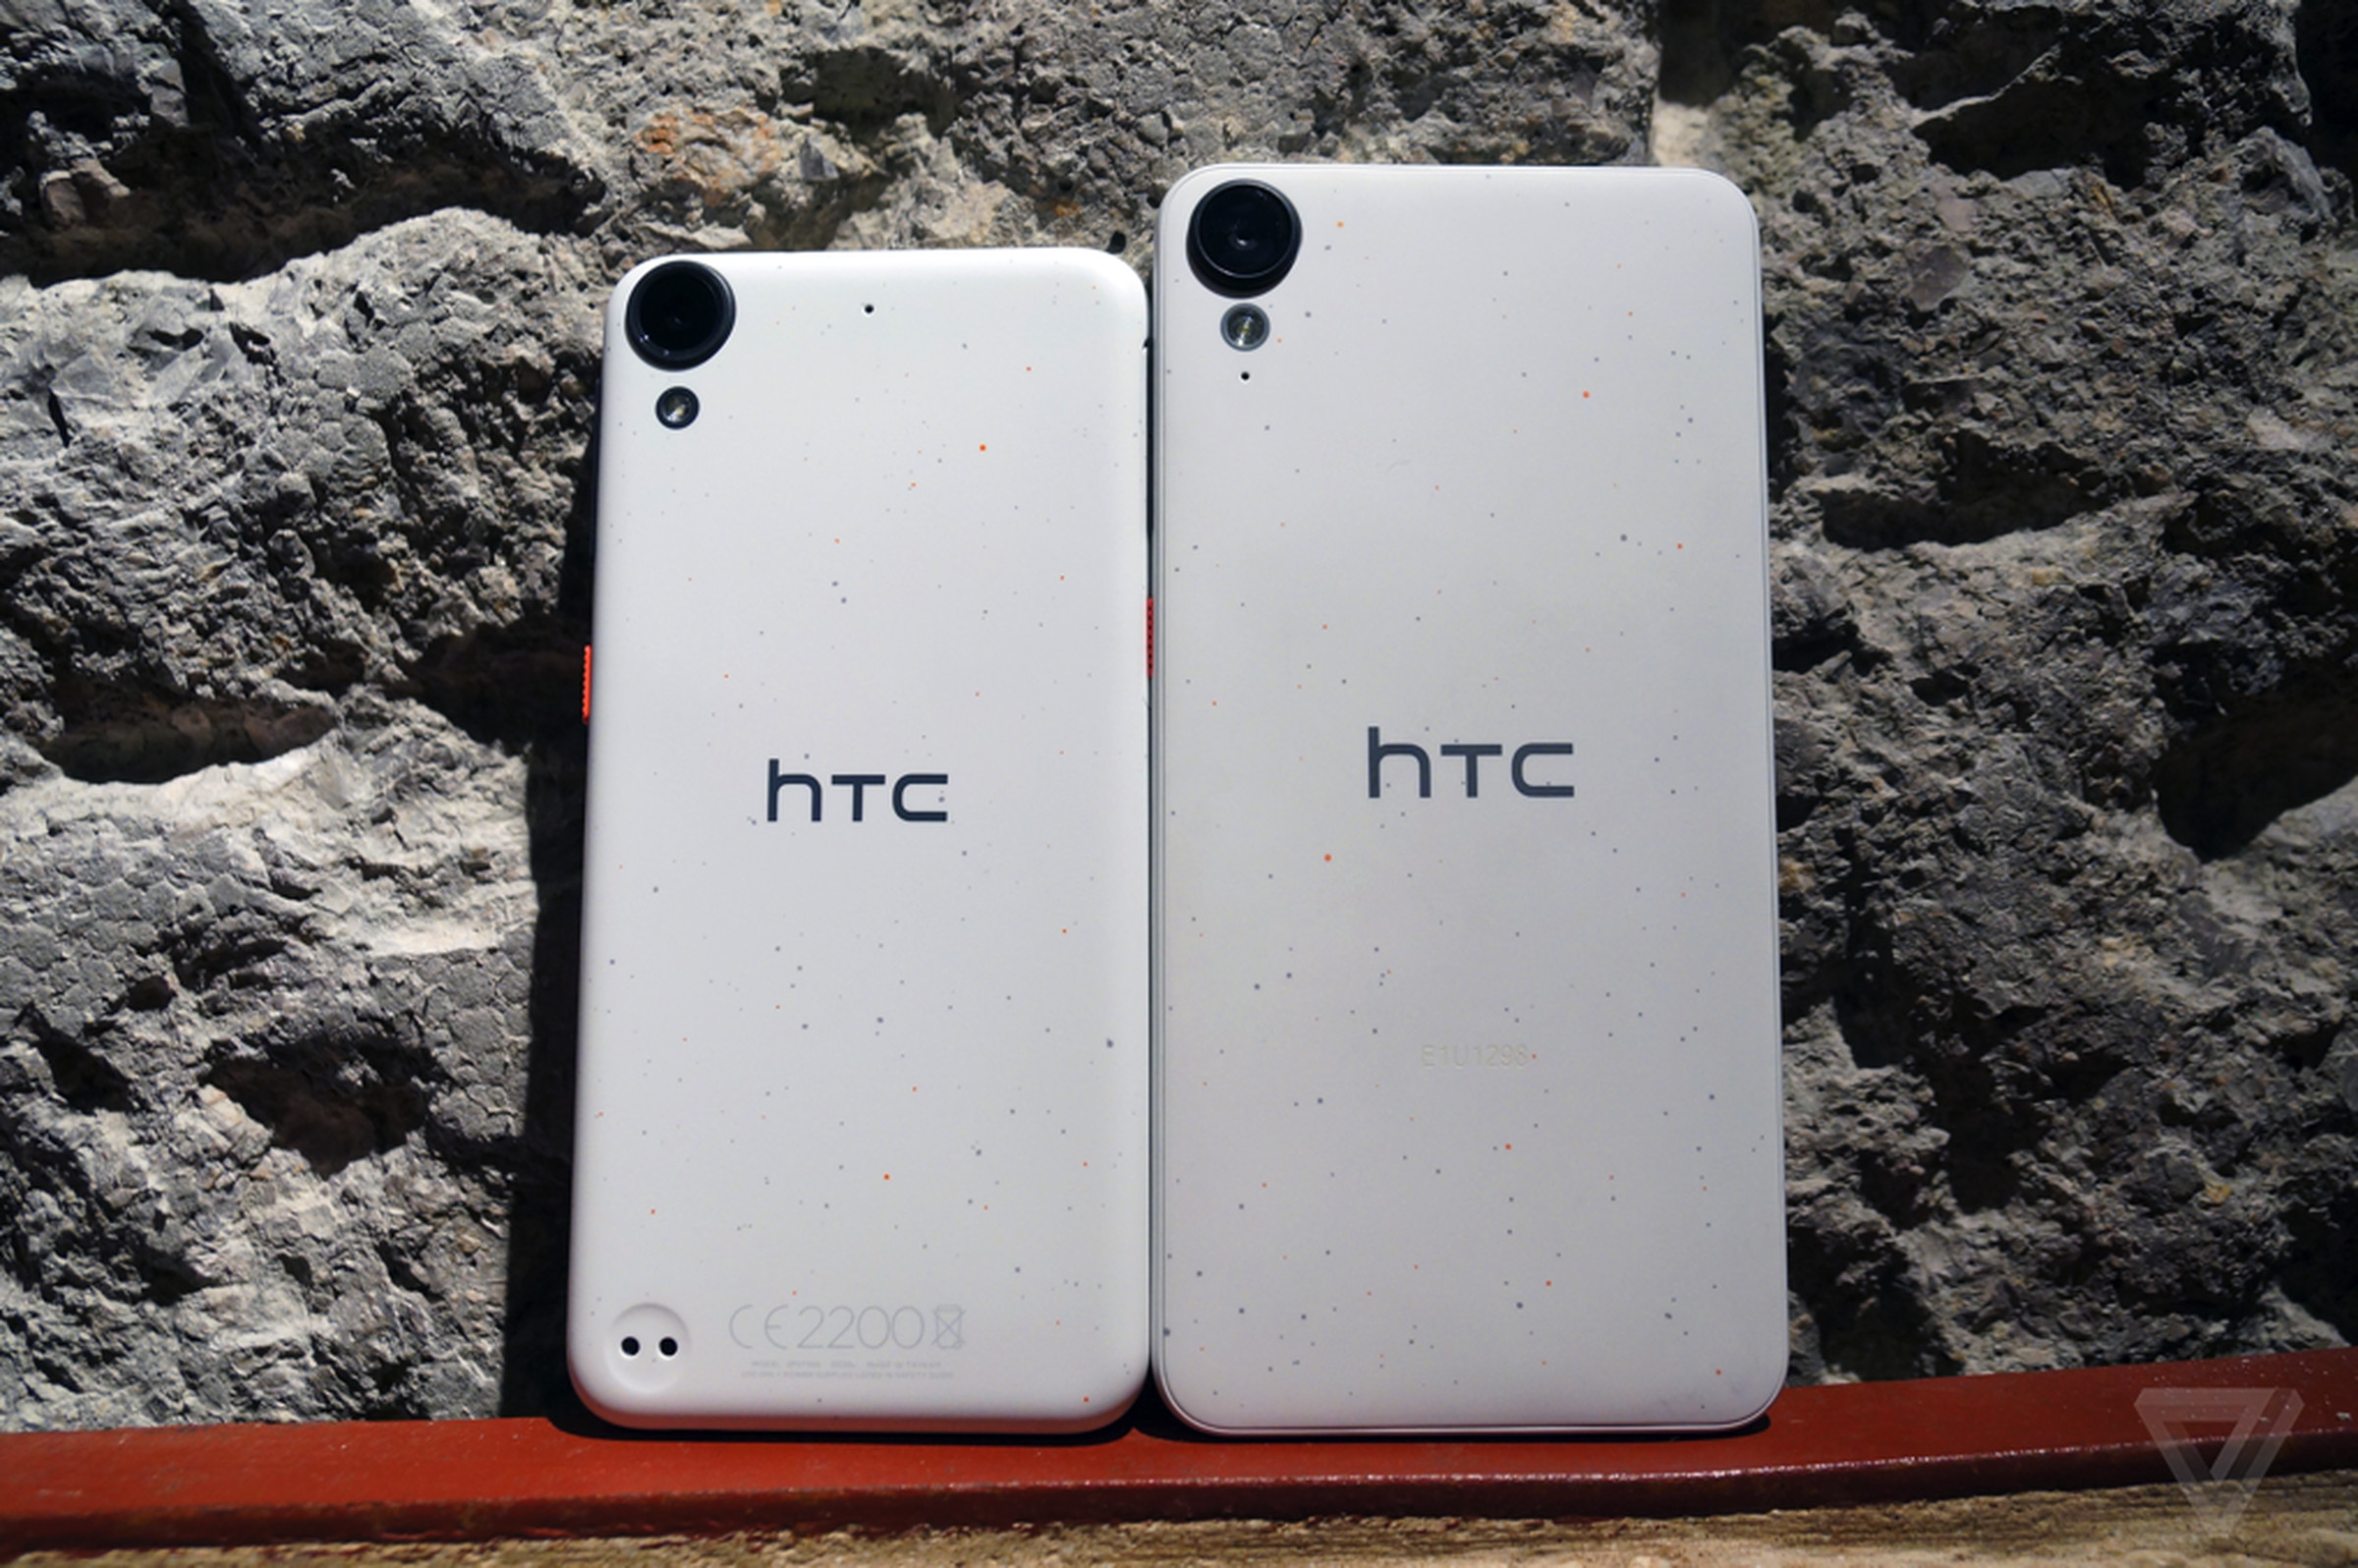 HTC Desire 530 and 630 with Micro Splash design